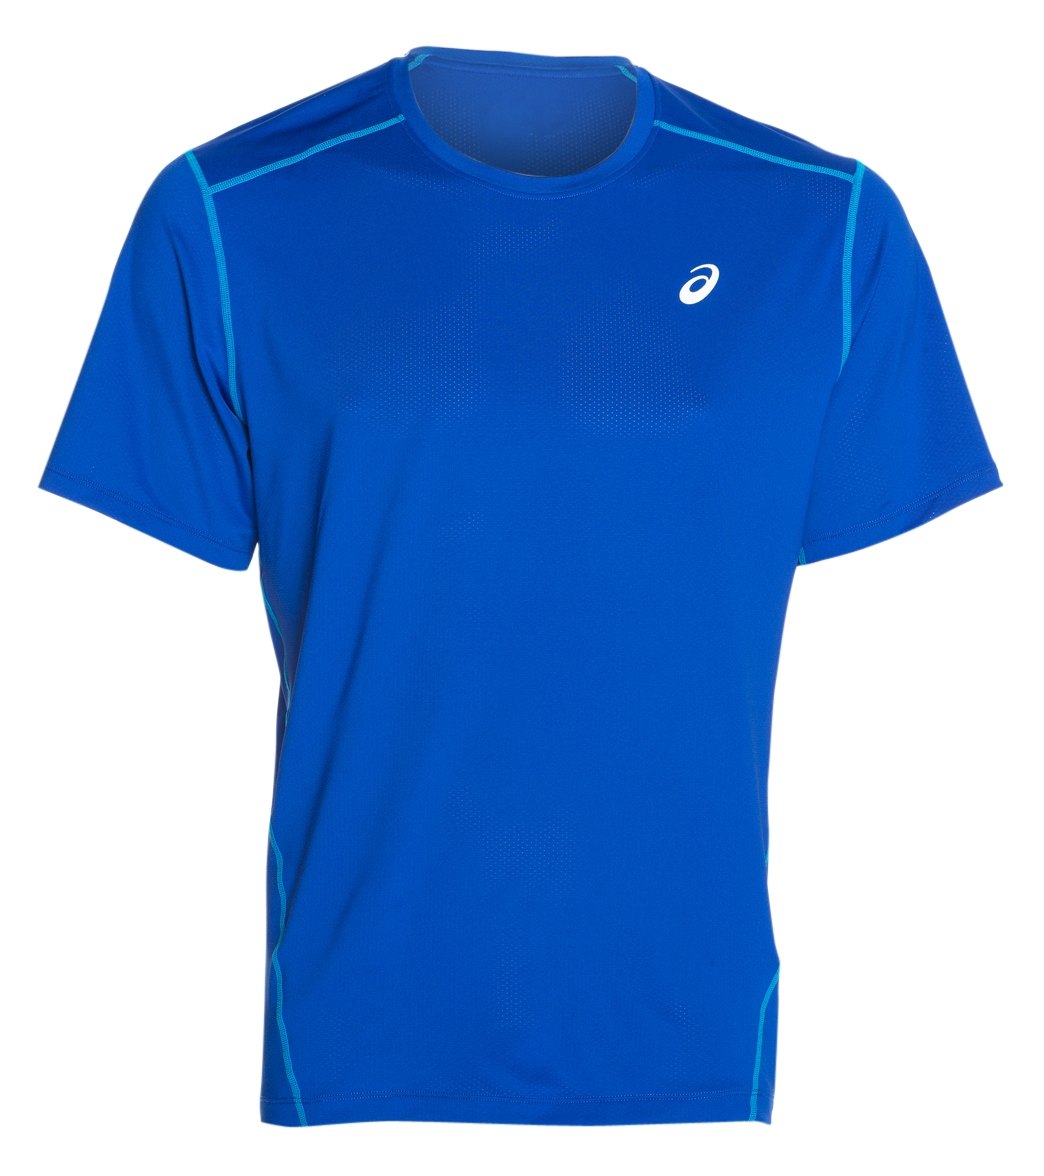 Asics Men's Pr Lyte Short Sleeve Shirt - Airforce Blue/Atomic Extra Large Size Xxl - Swimoutlet.com